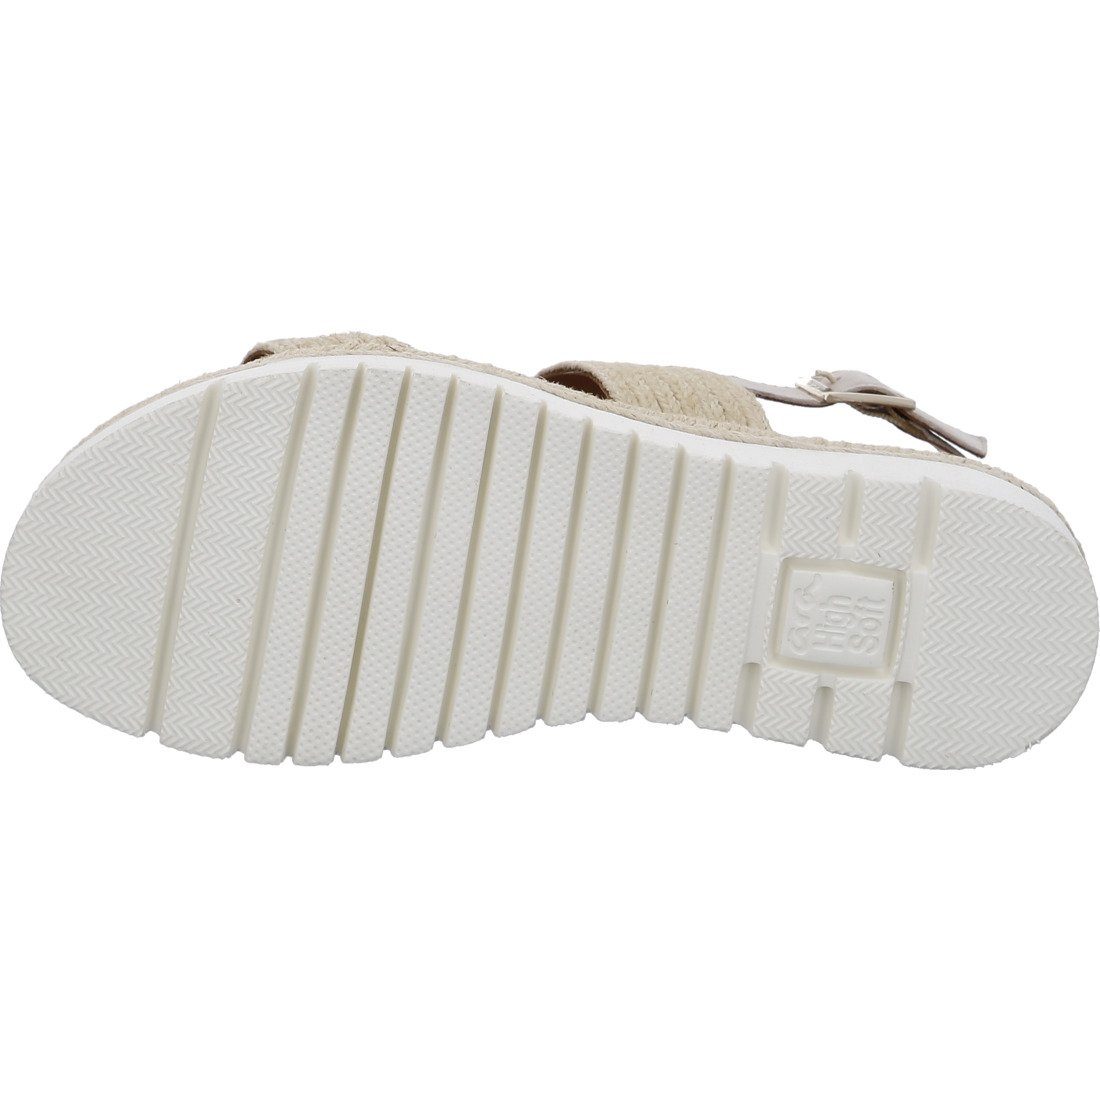 Ara Ara Schuhe, Sandalette Jamaika Materialmix Sandalette beige - 048211